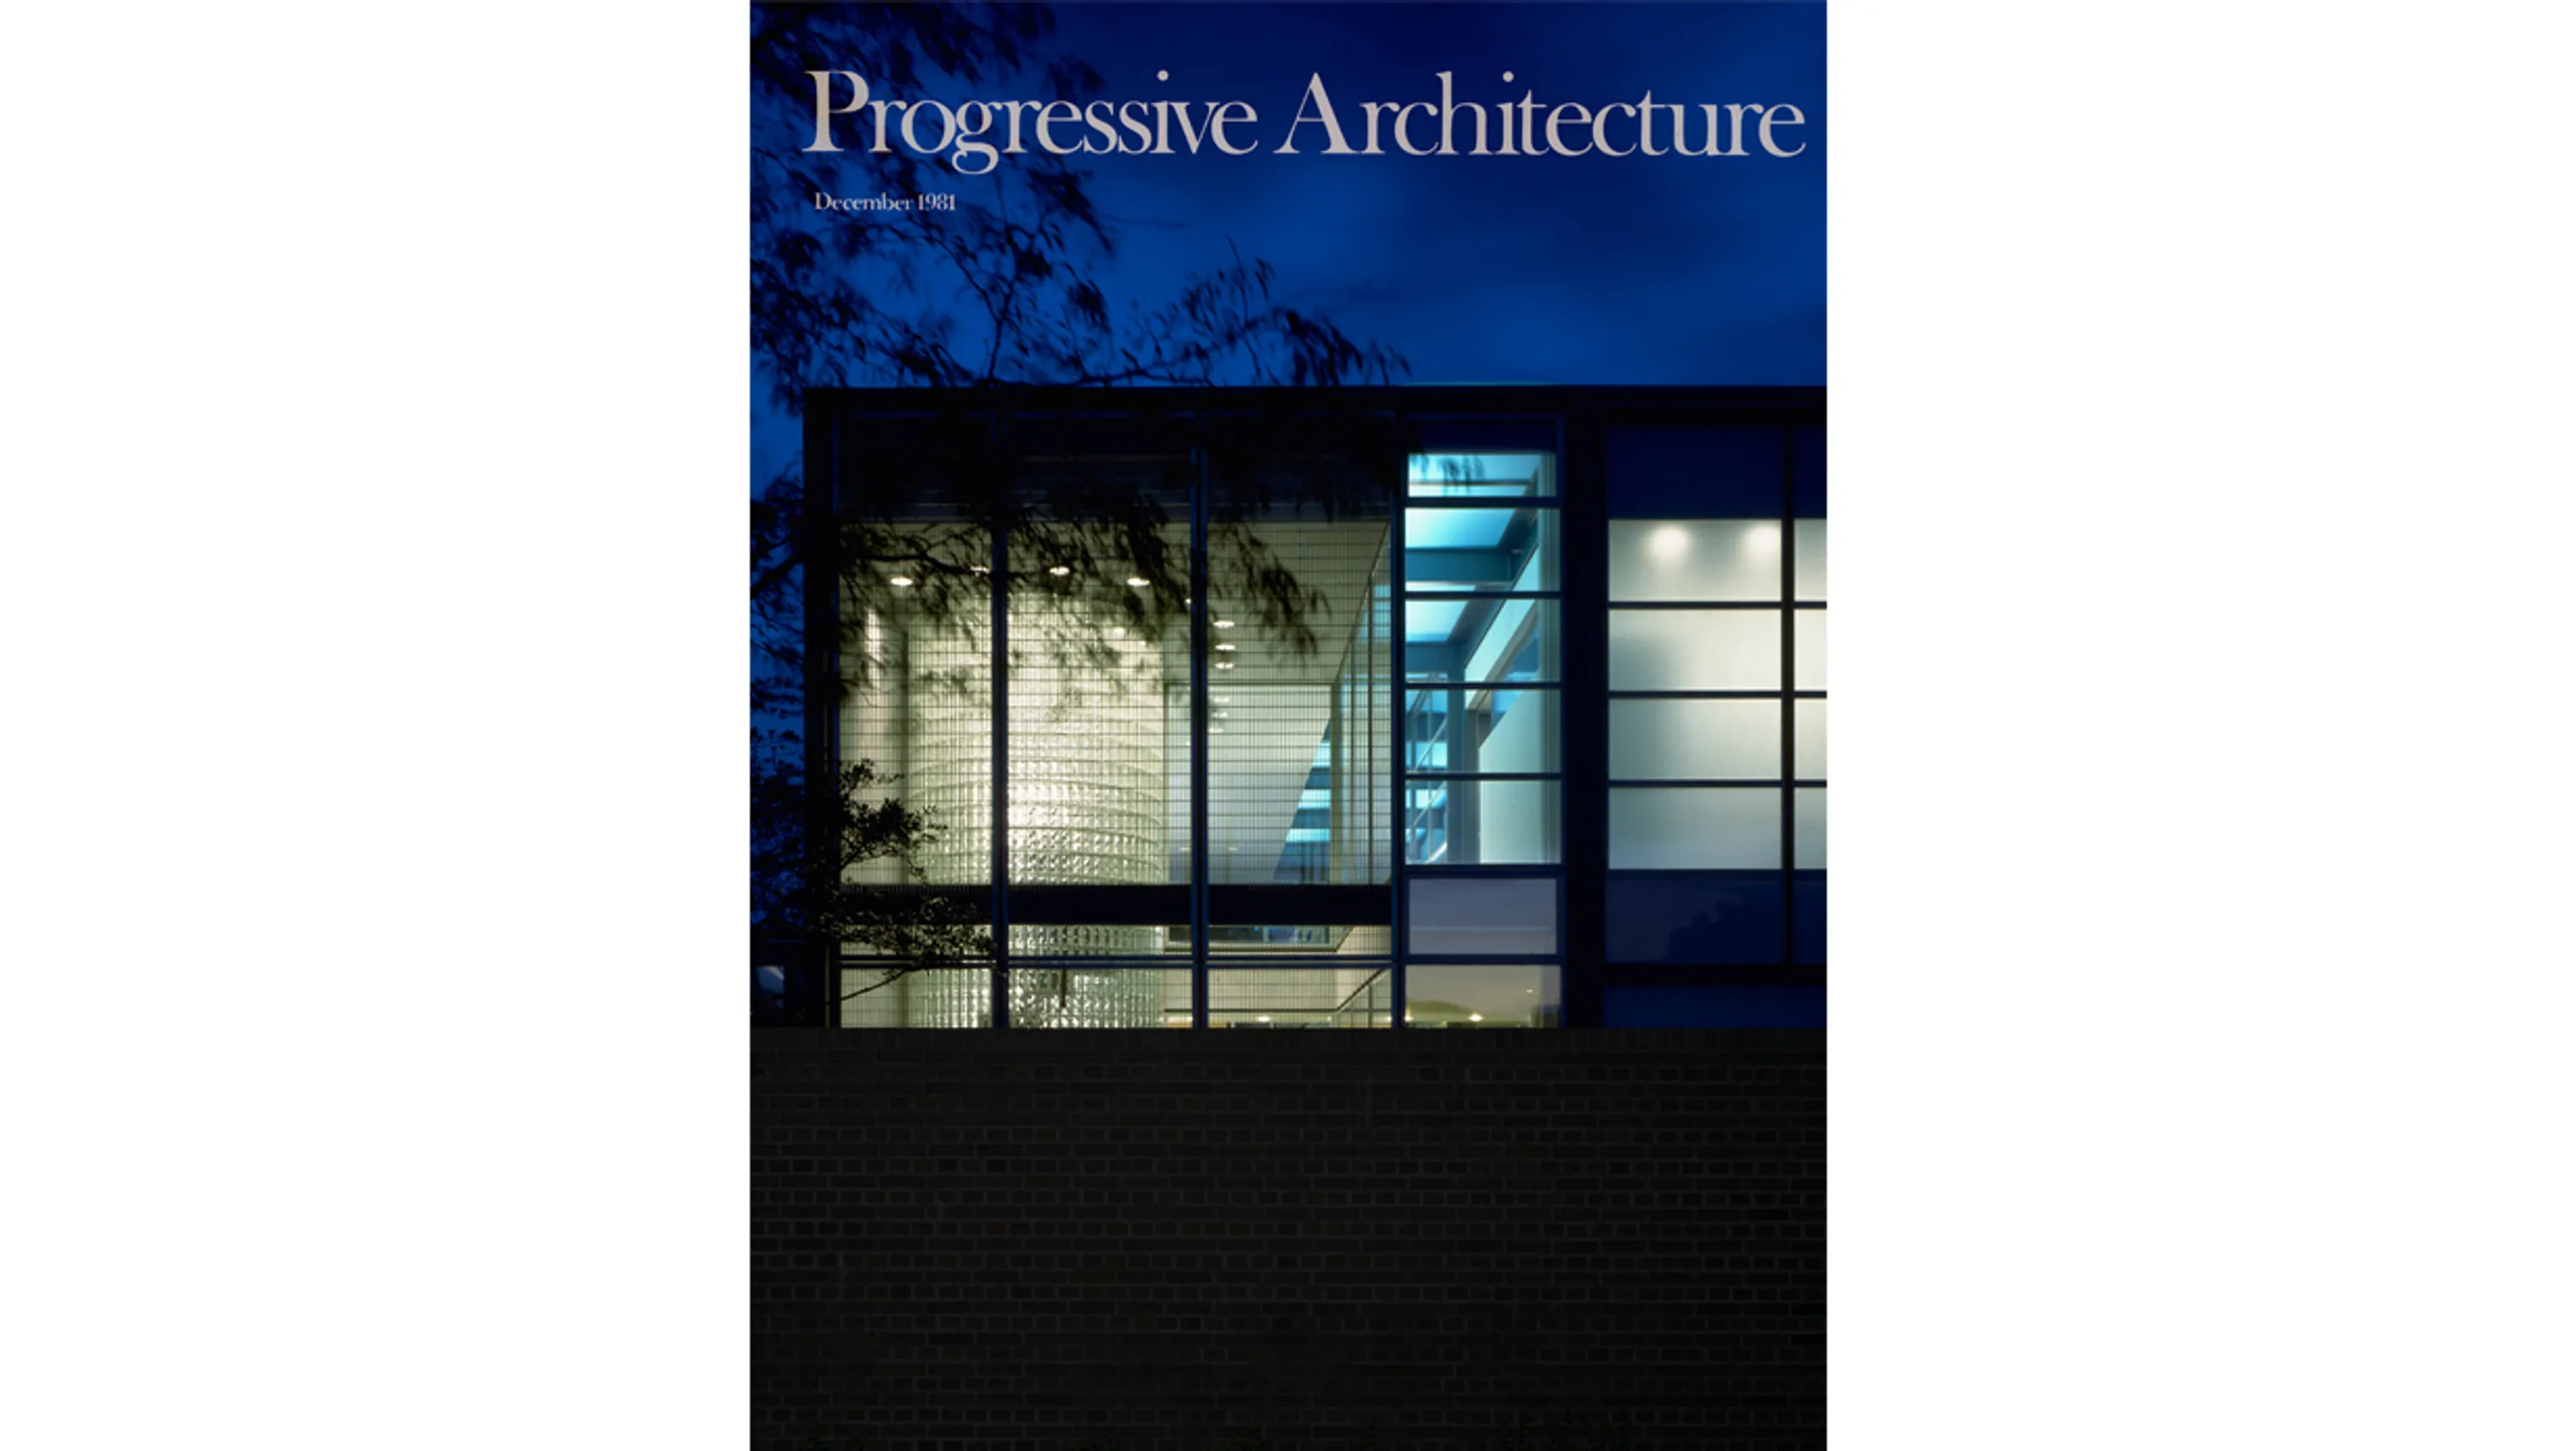 Progressive Architecture: A Steel & Glass House Thumbnail